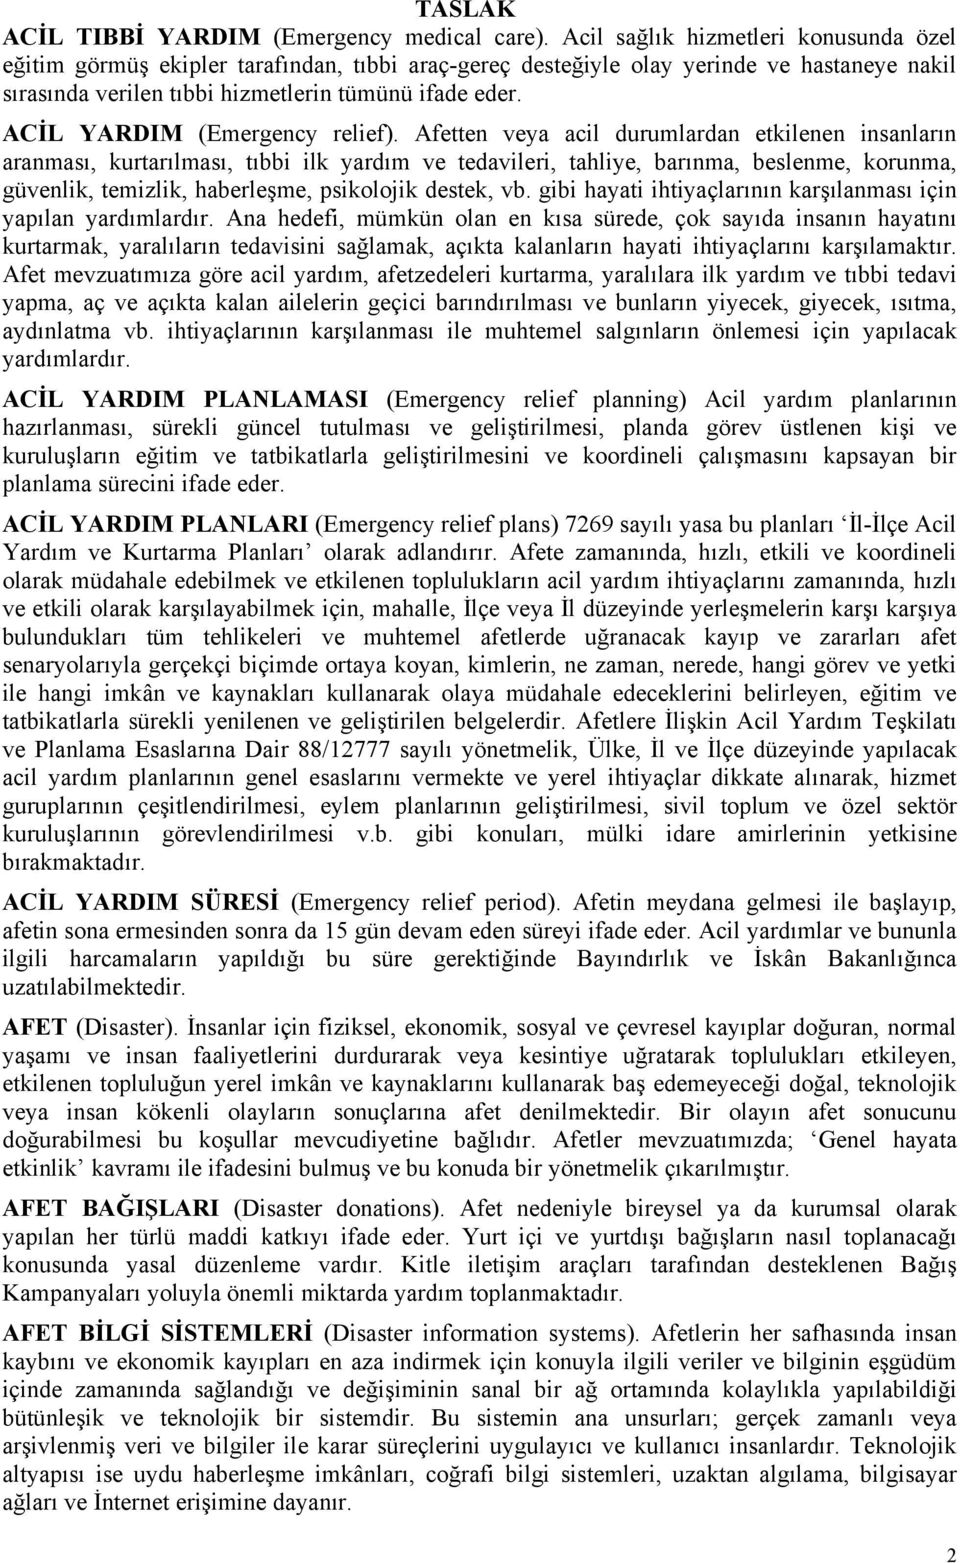 ACİL YARDIM (Emergency relief).